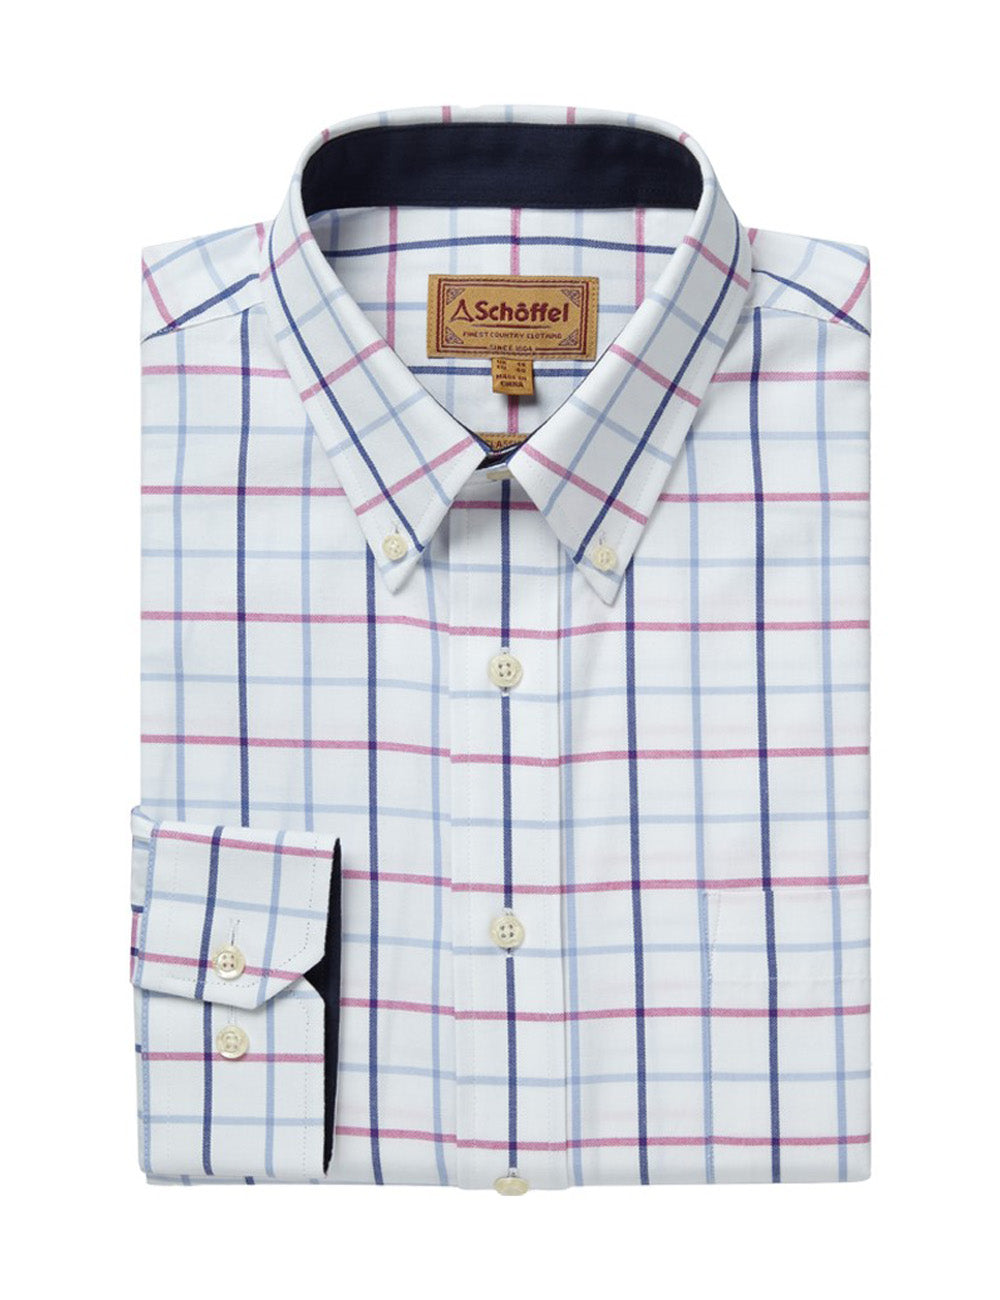 Schoffel Brancaster Classic Shirt - Blue/Pink Check